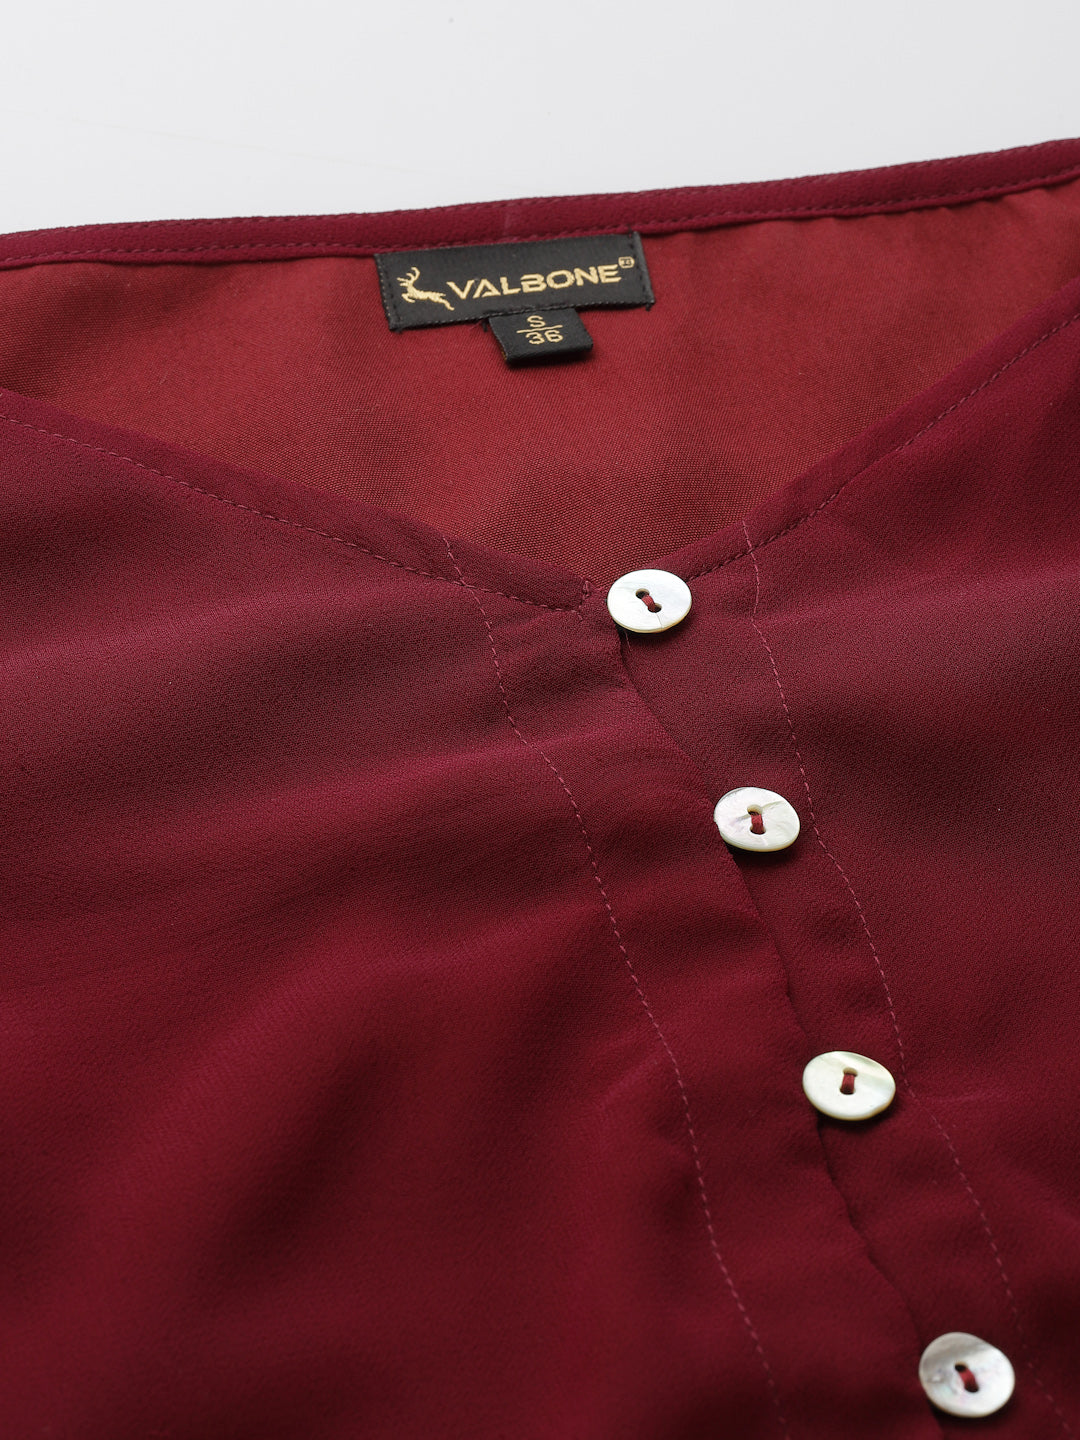 Valbone Women's Maroon Georgette Button Closure Top 3/4-Sleeves